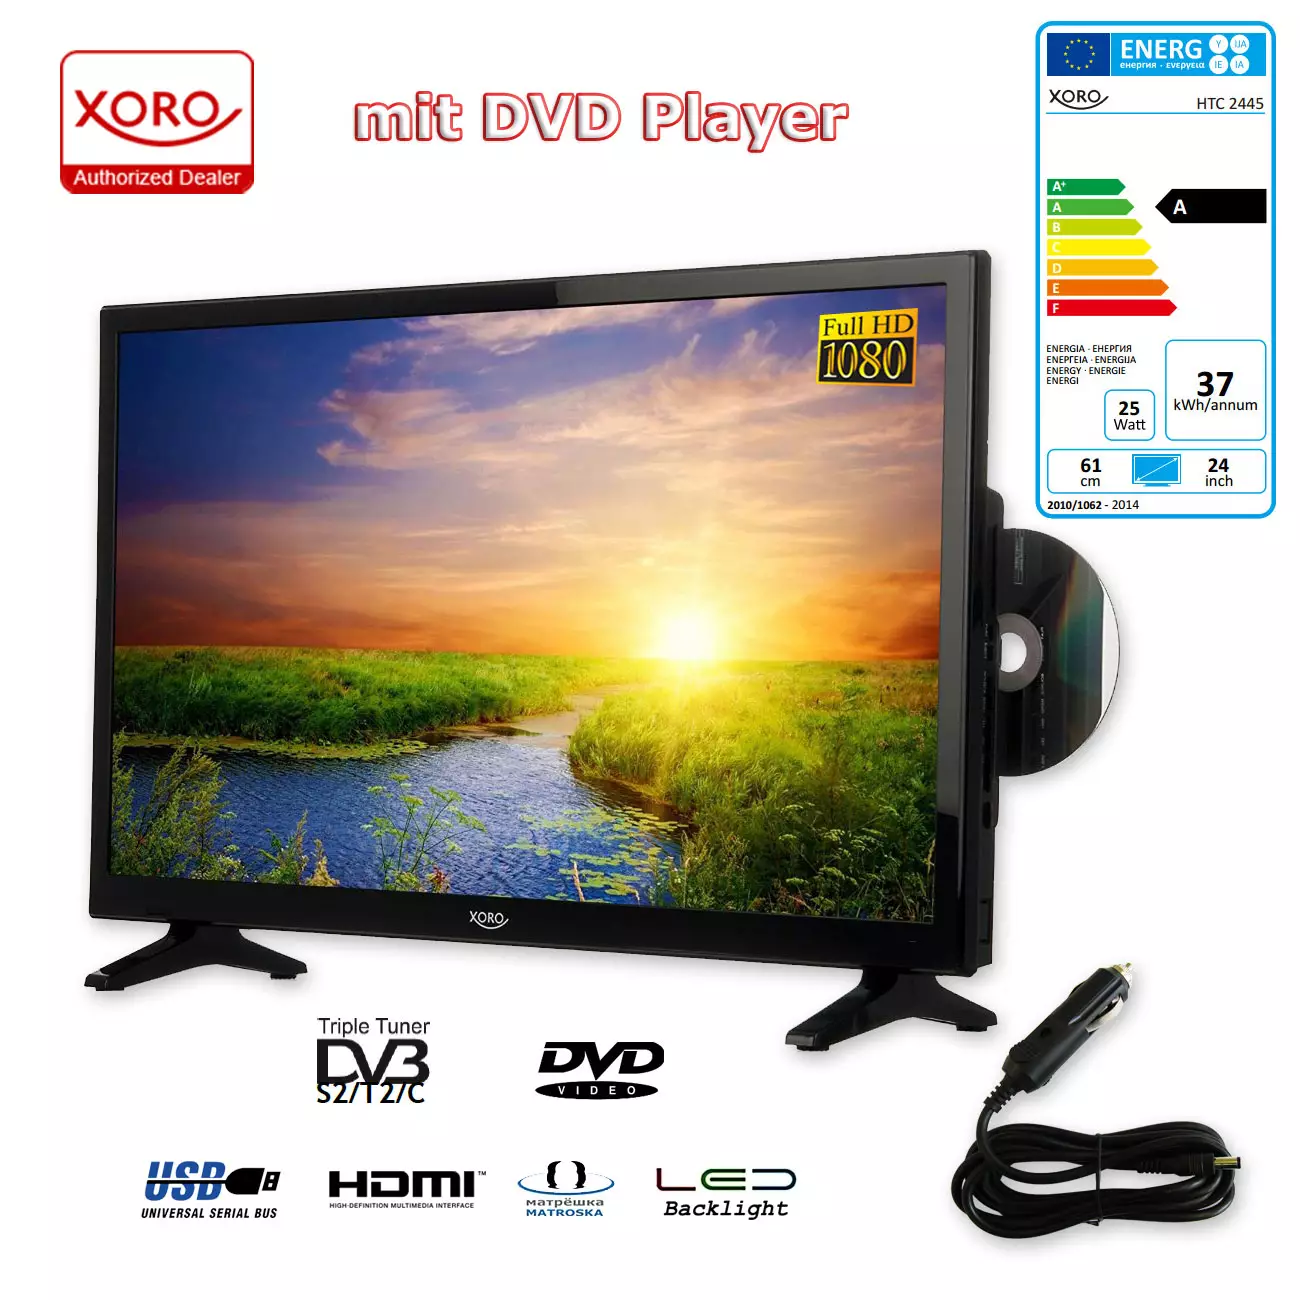 Xoro HTC 2445 HD LED TV mit DVD